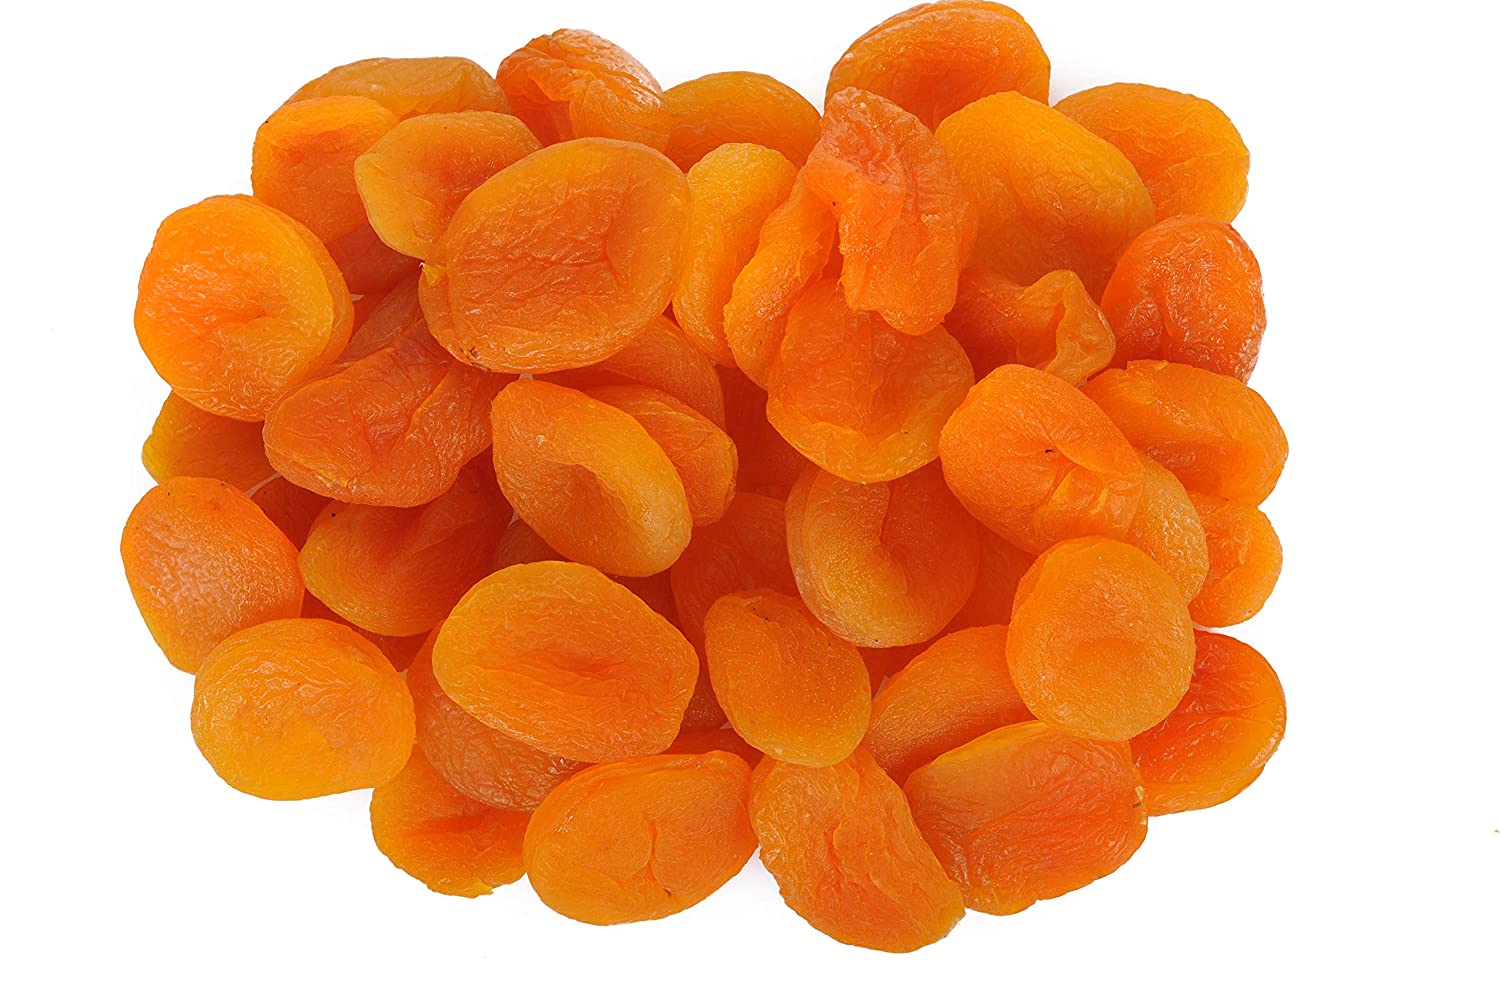 Apricot dry fruit benefits